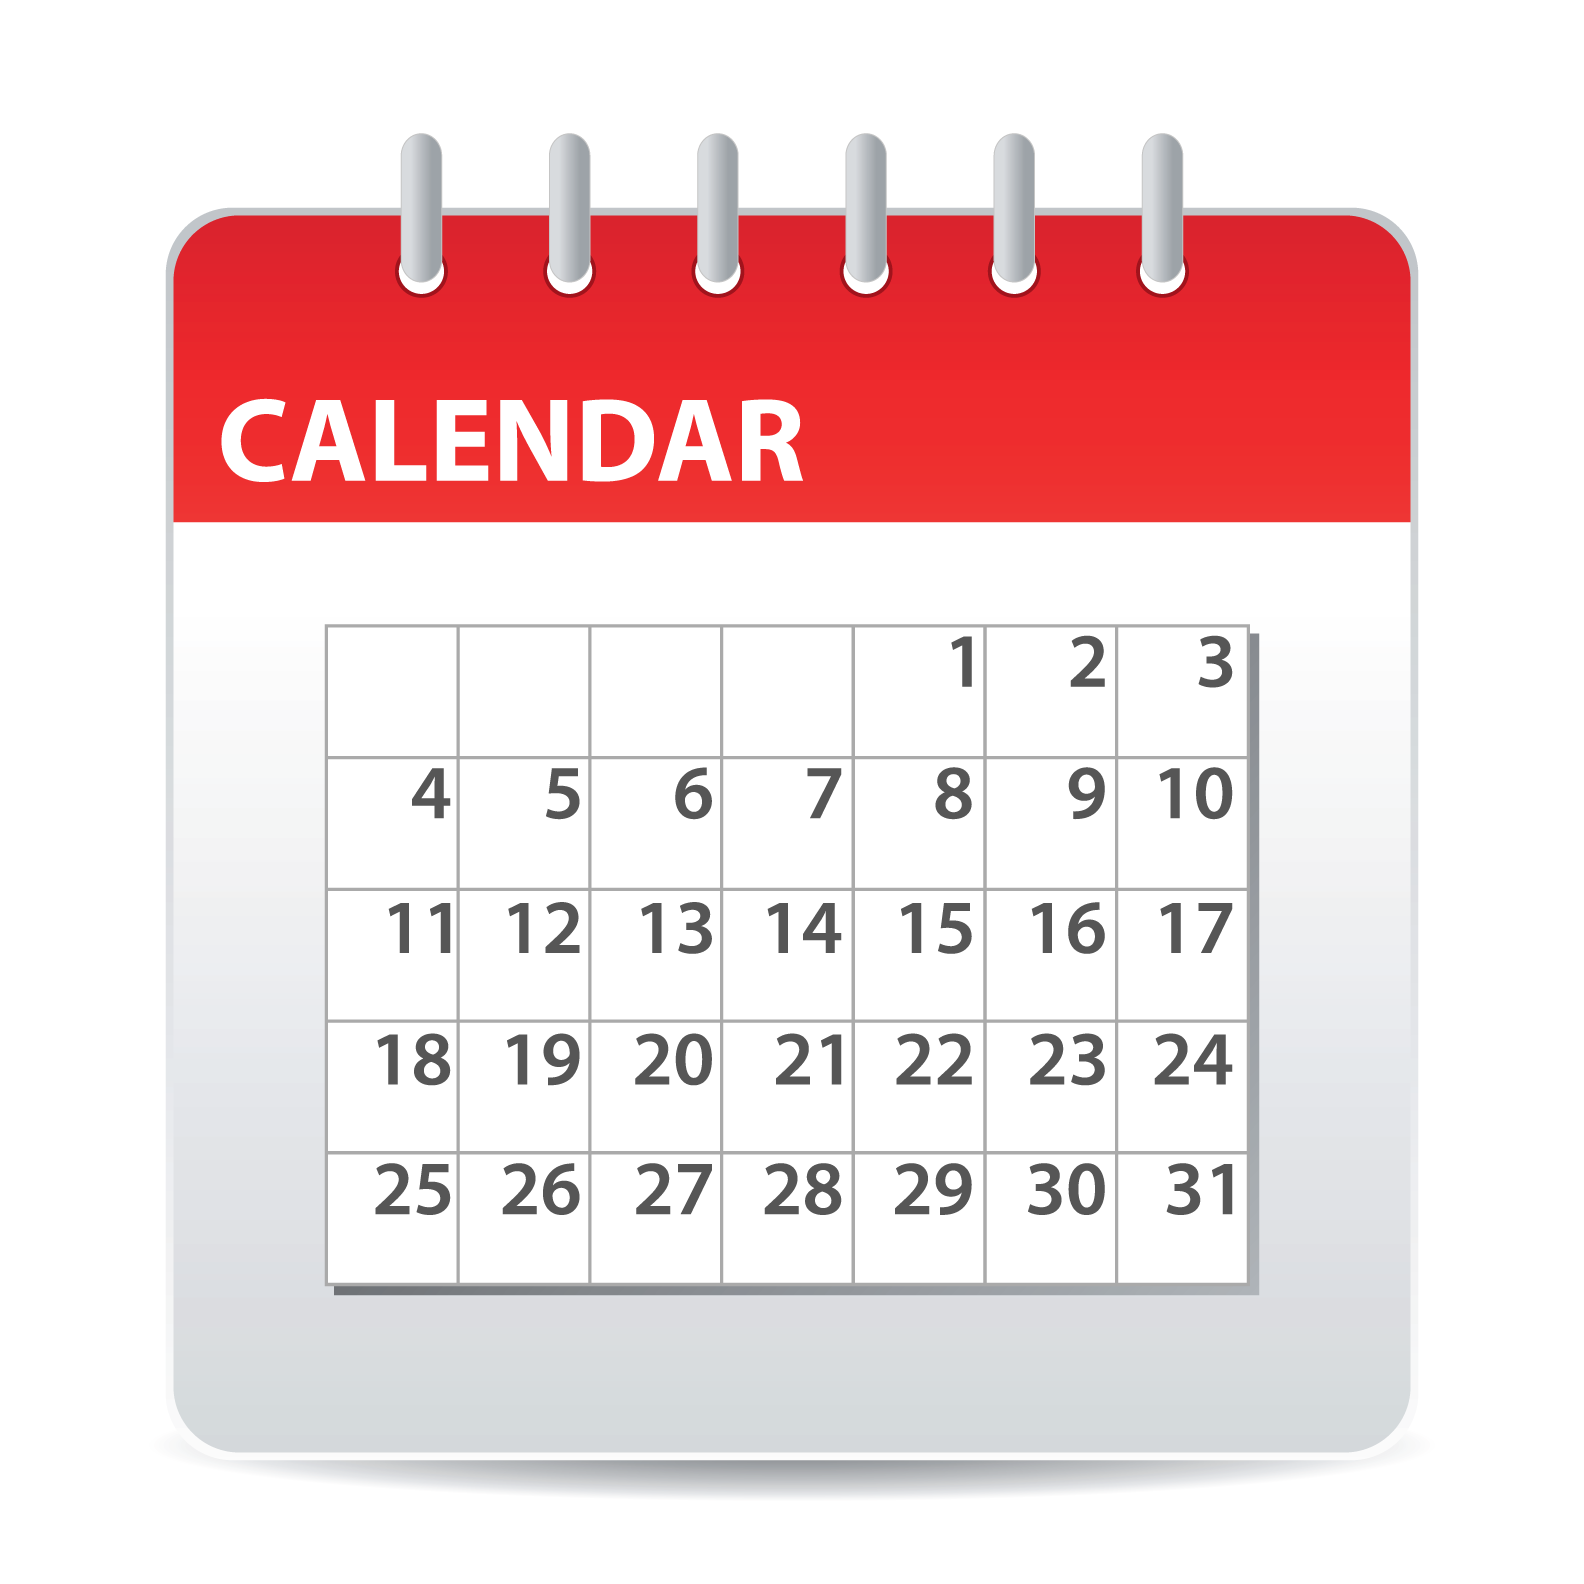 Calendar PNG Image